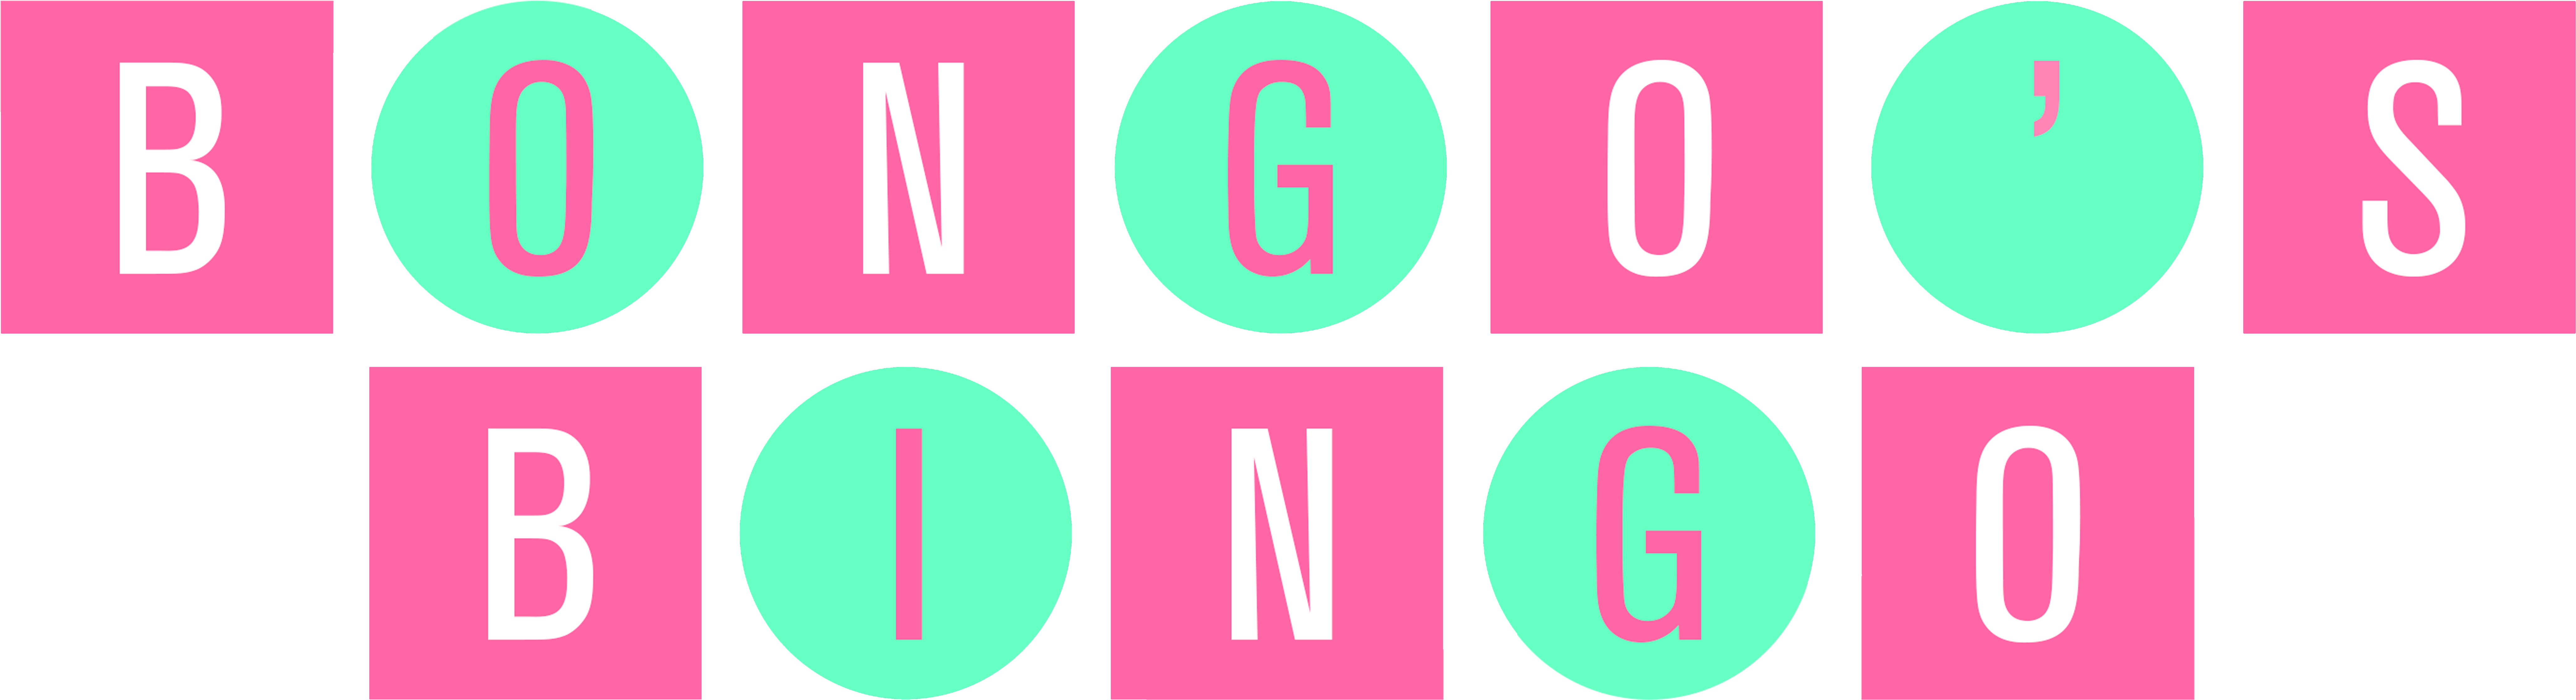 Bongos Bingo Logo Png Clipart Large Size Png Image Pikpng